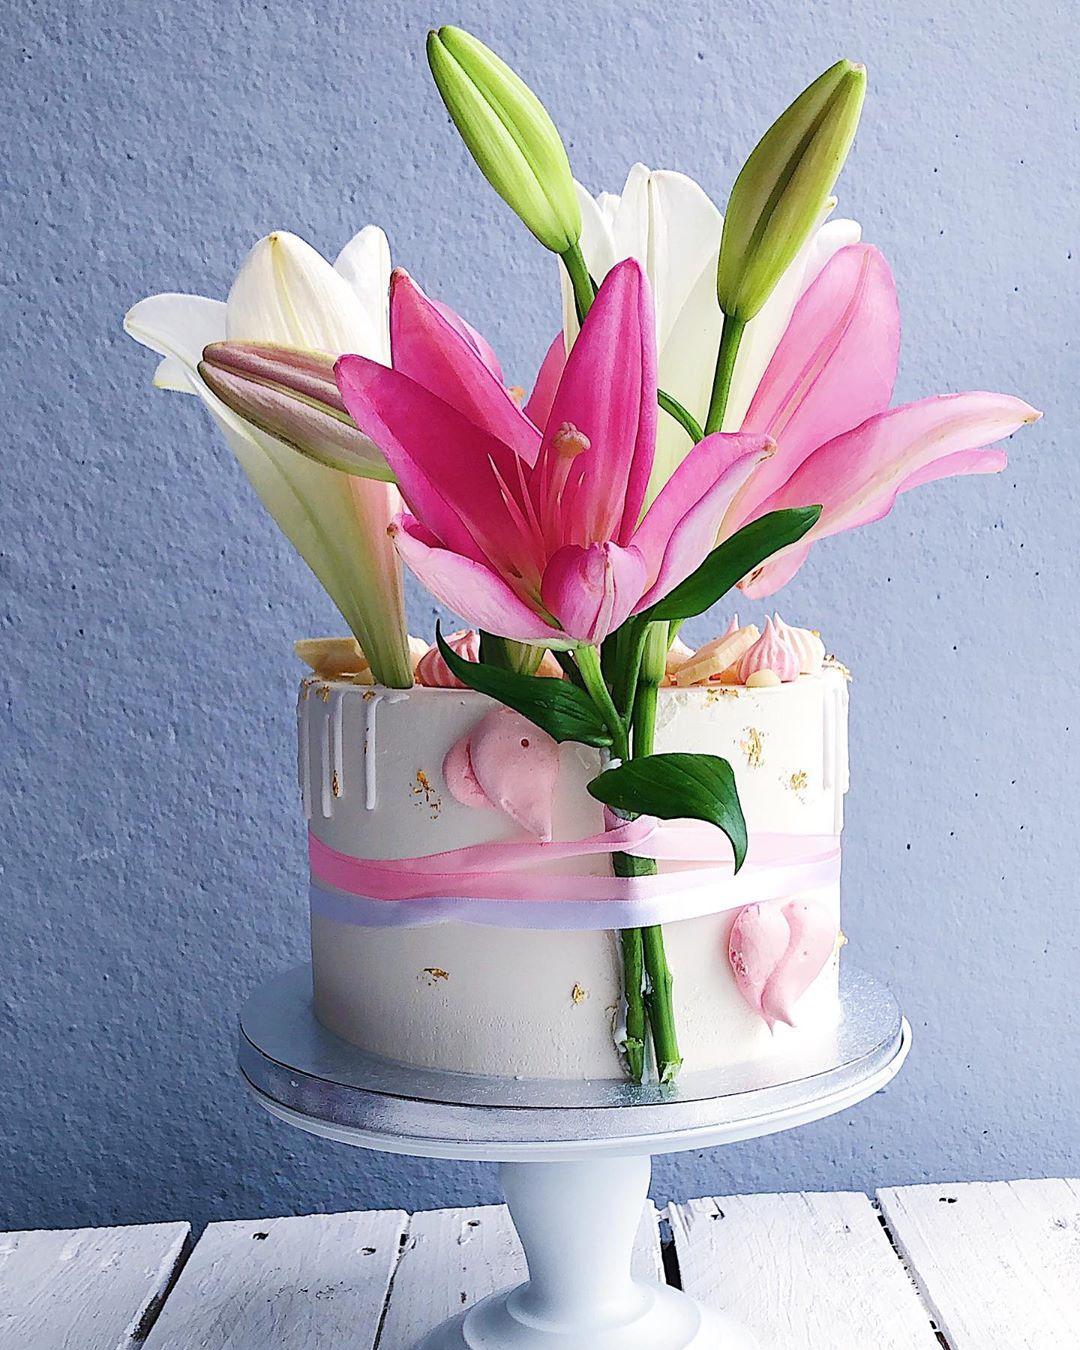 Pin by rebecca on 25 anniversary cake | 25 anniversary cake, 25th wedding  anniversary cakes, Anniversary cake designs